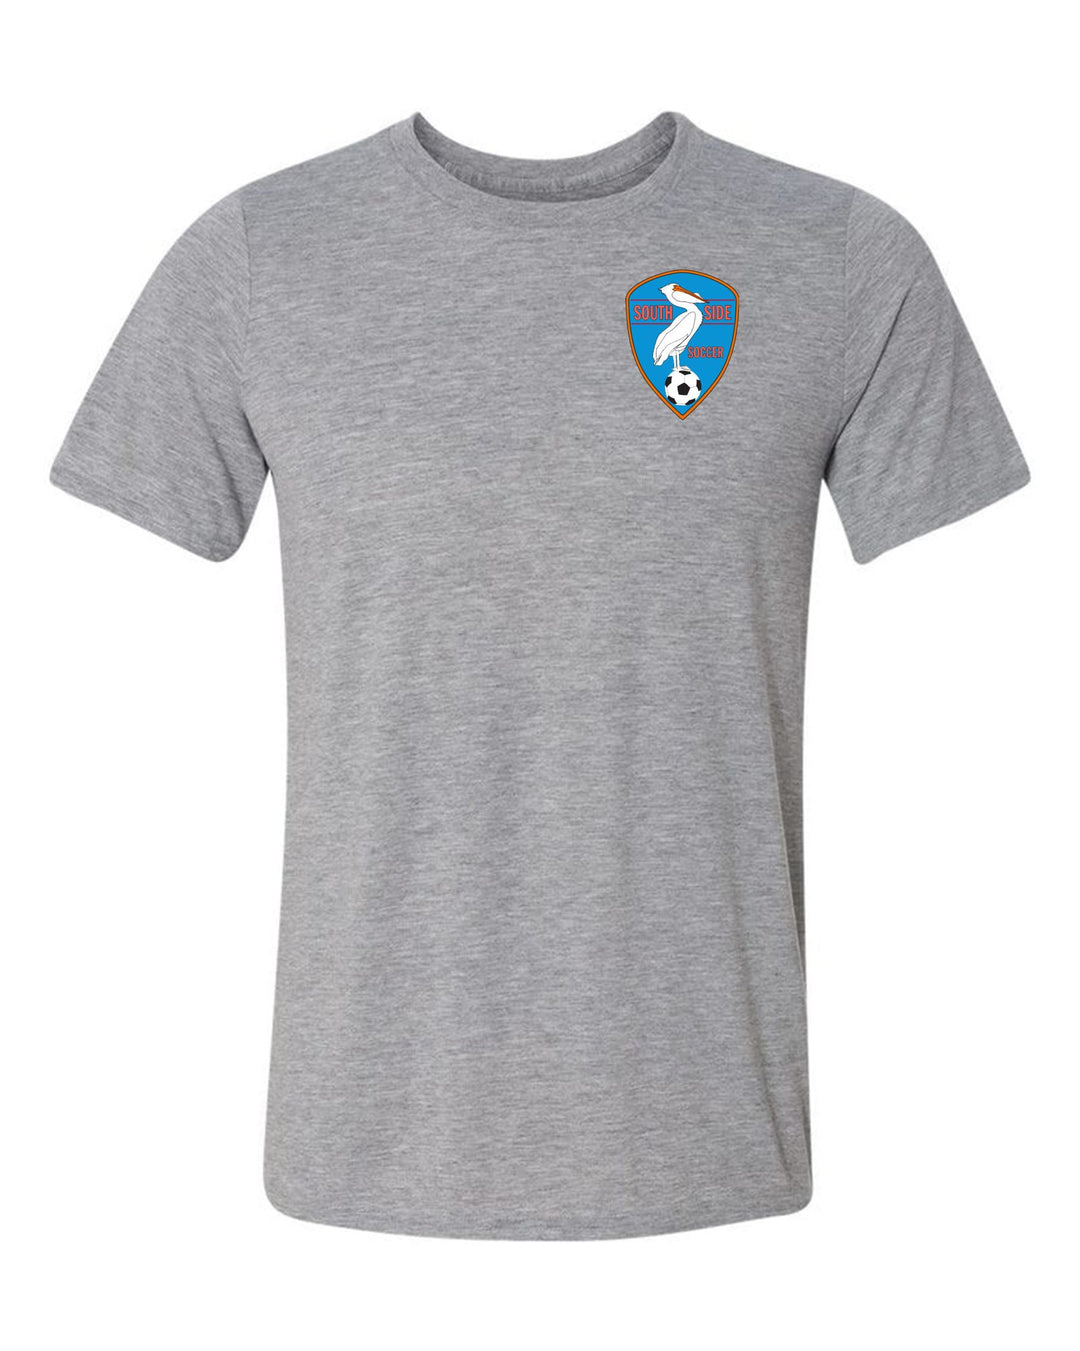 Southside Youth Soccer Short Sleeve T-Shirt SYS Spiritwear SPORT GREY MENS SMALL - Third Coast Soccer